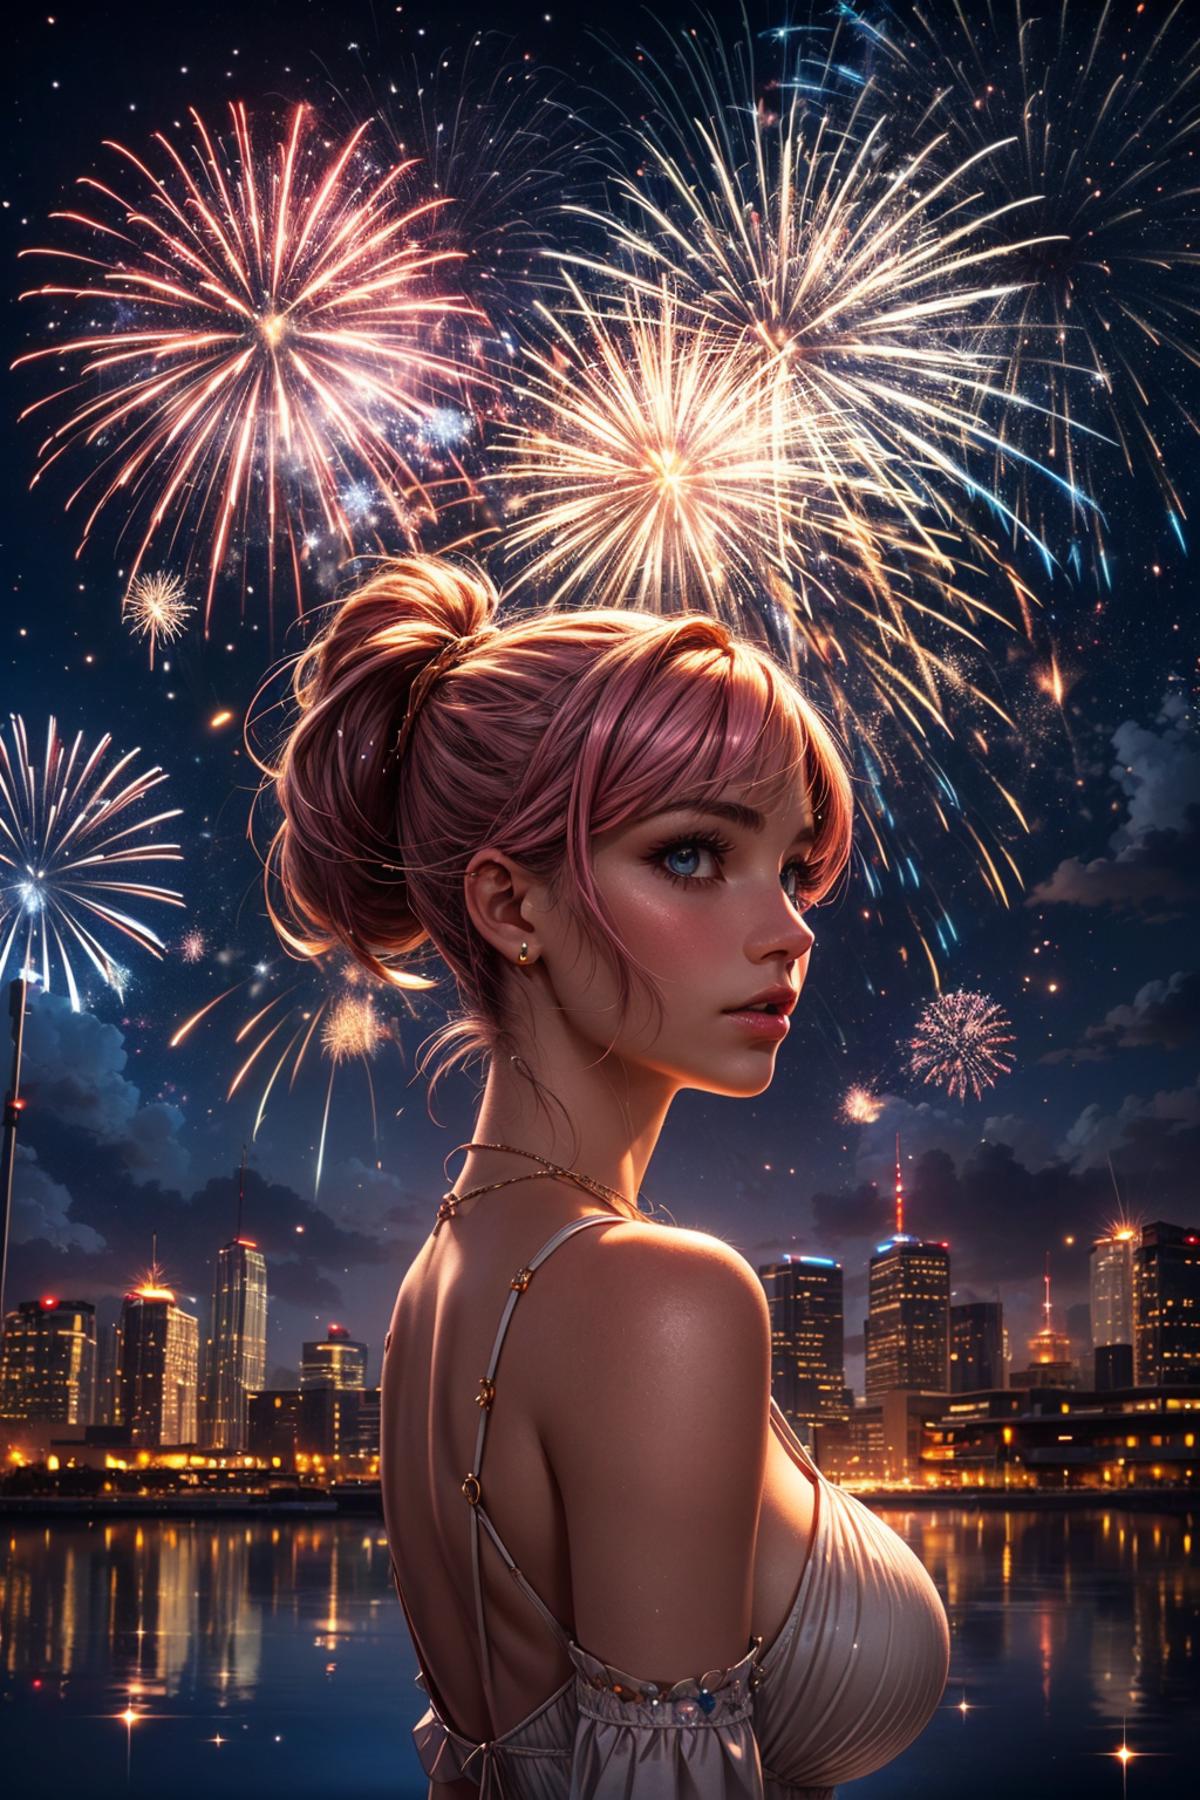 fireworks image by iJWiTGS8